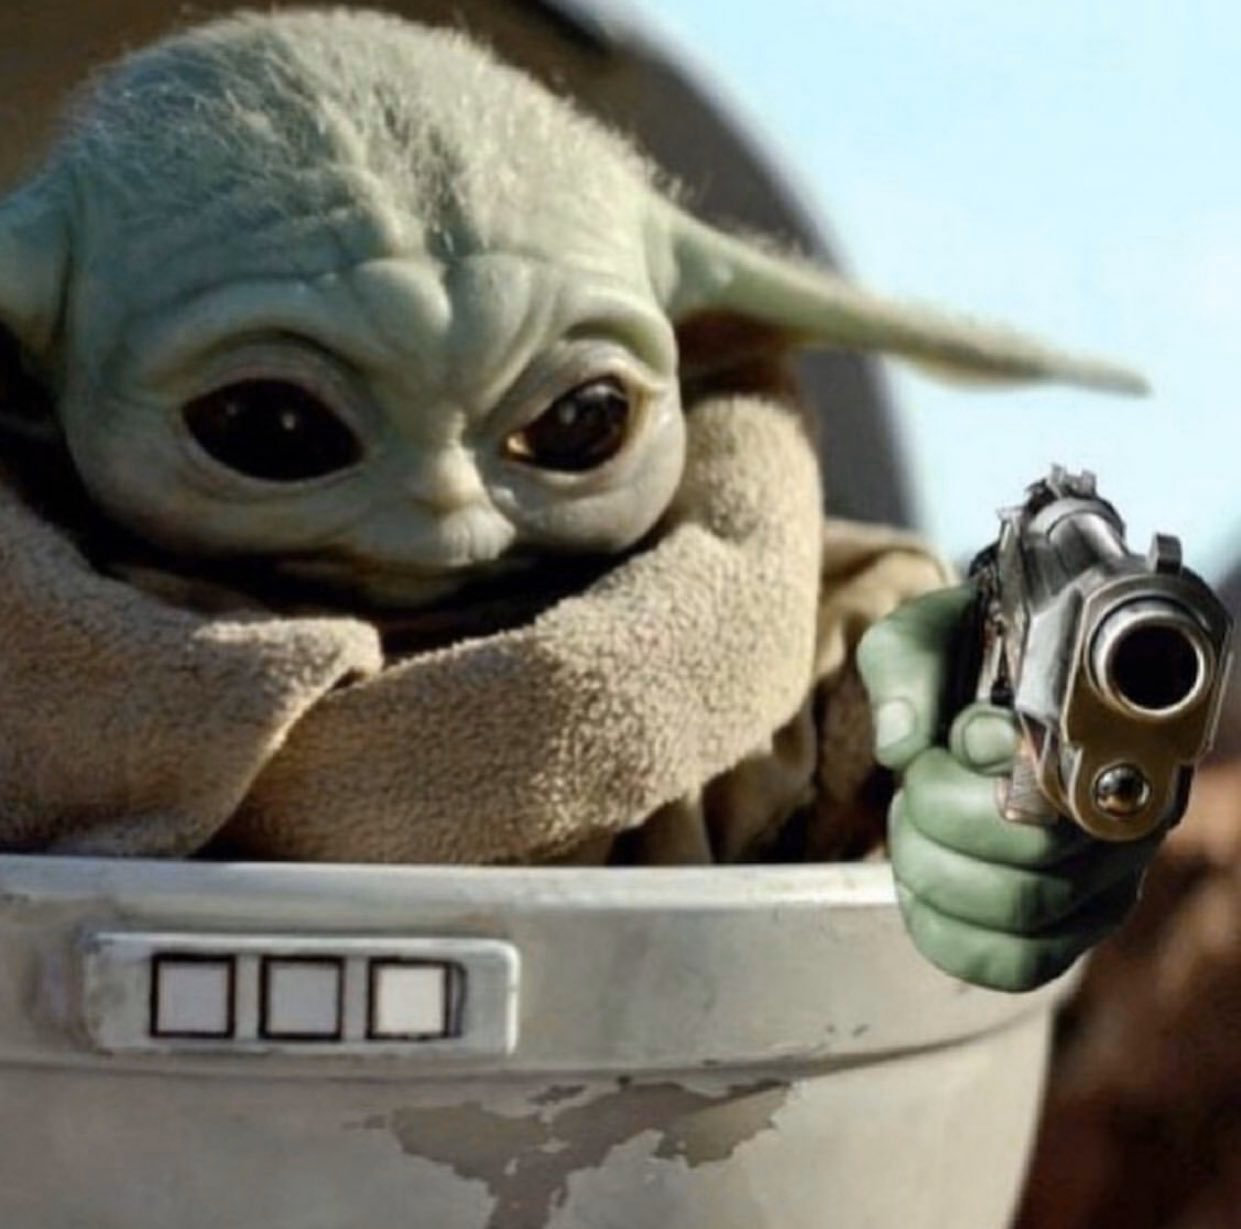 Baby Yoda Meme With Gun - roblox character holding gun meme